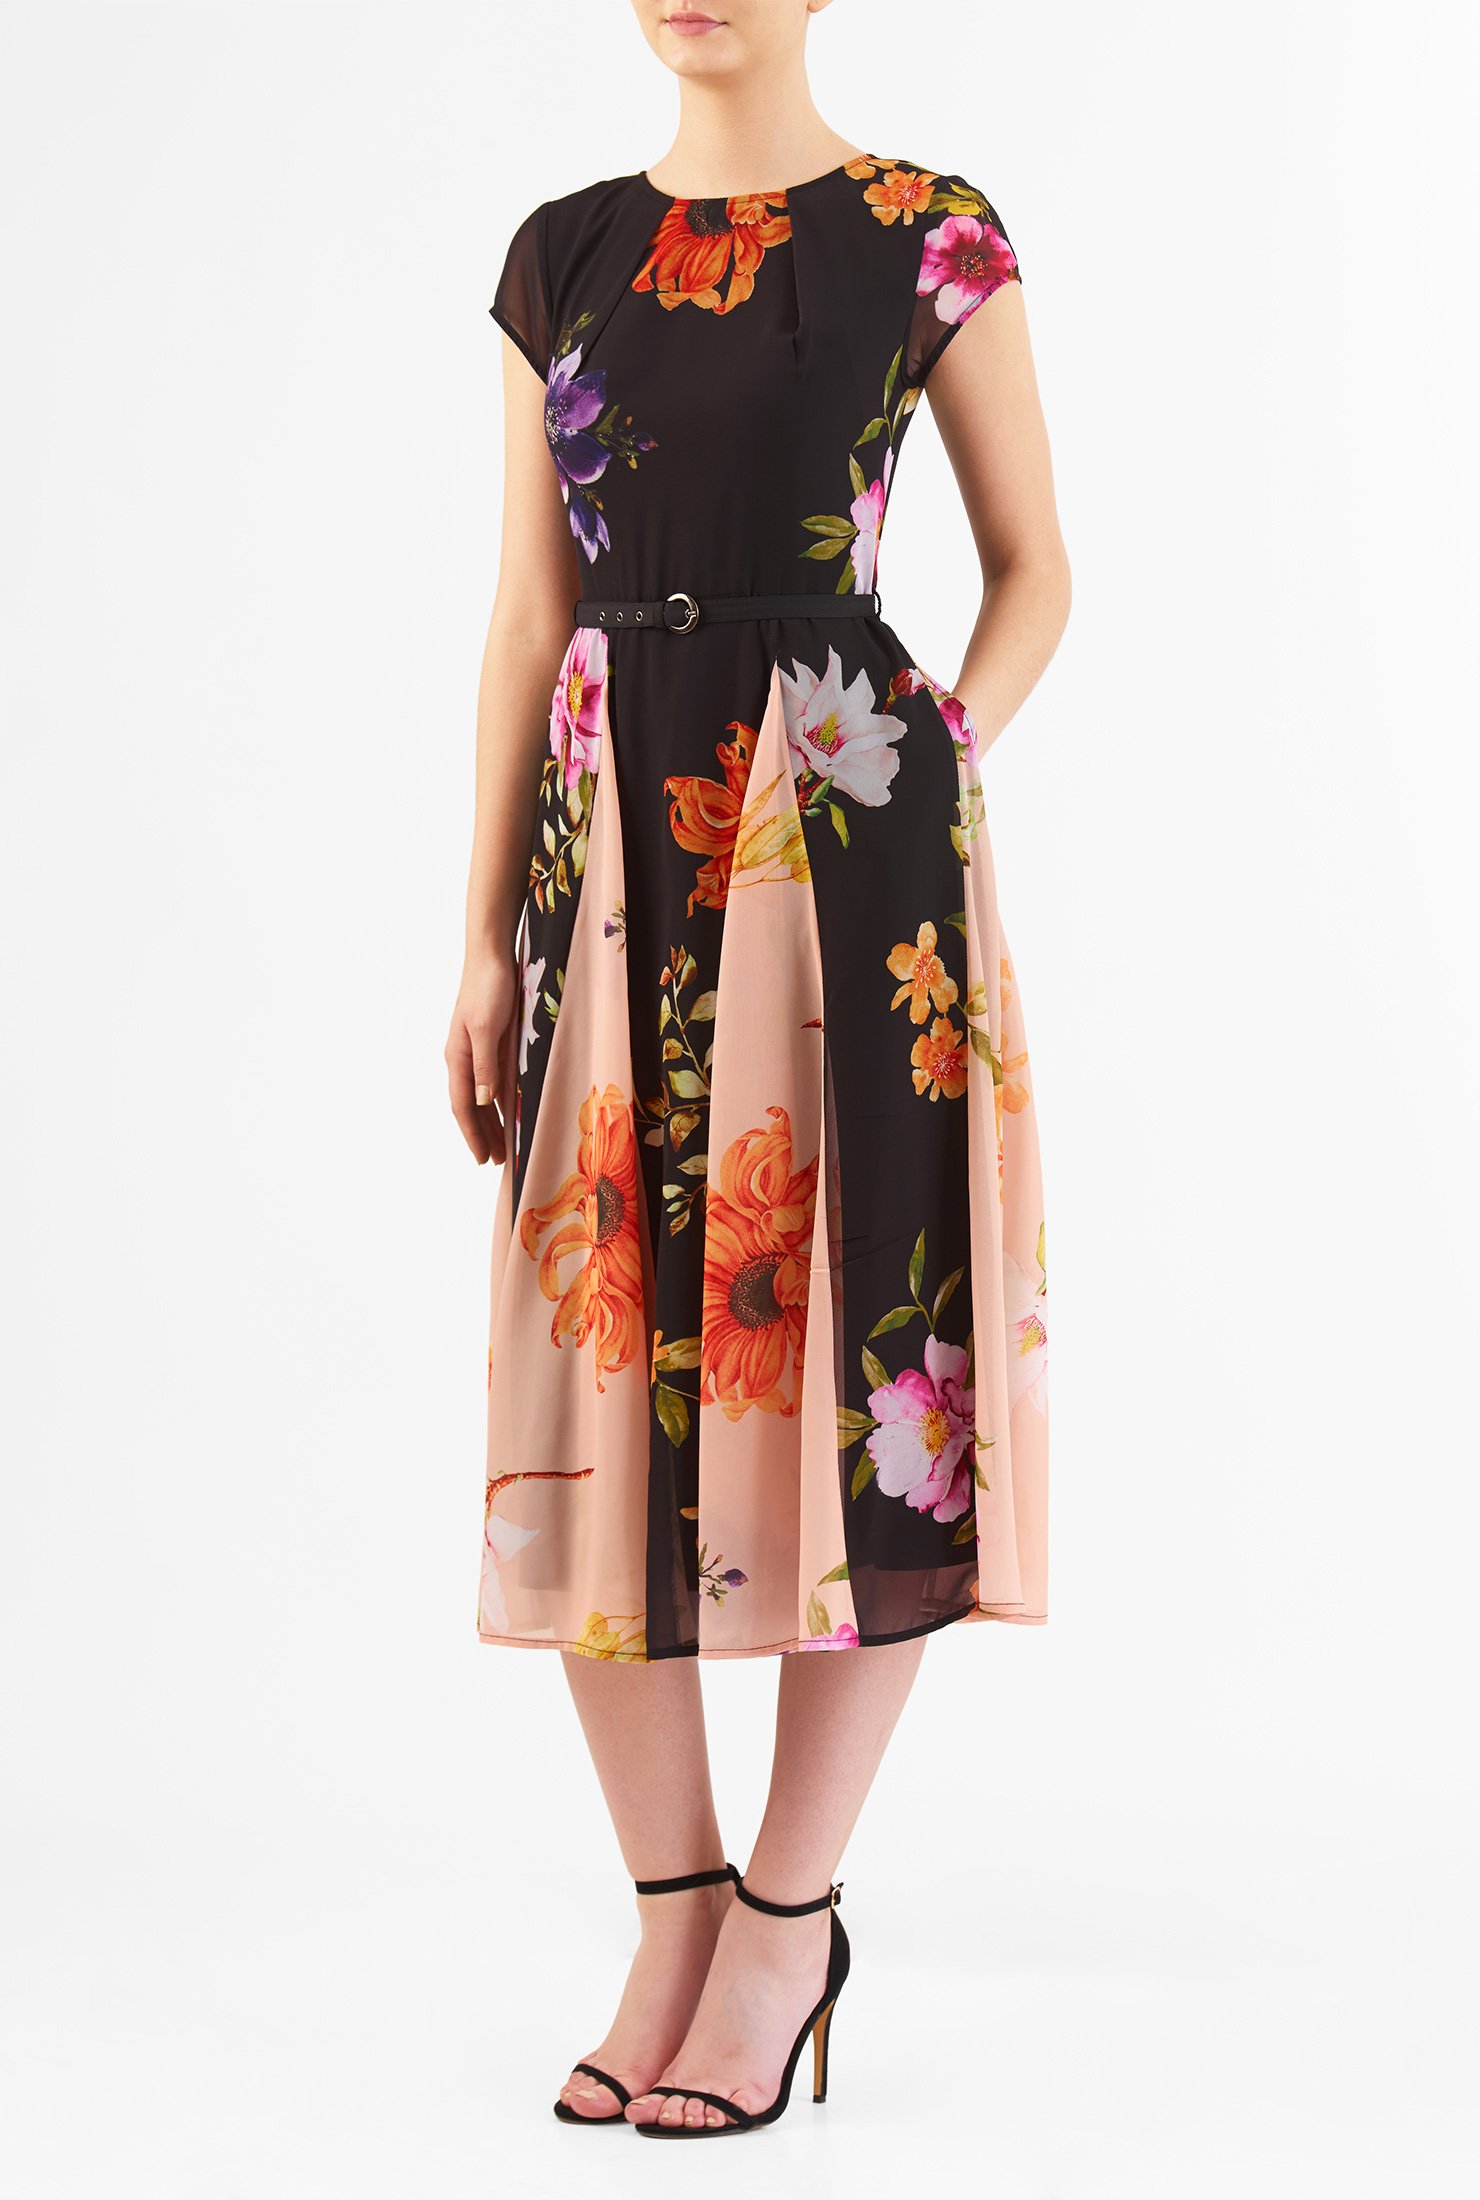 Shop Tropical floral print georgette belted dress | eShakti